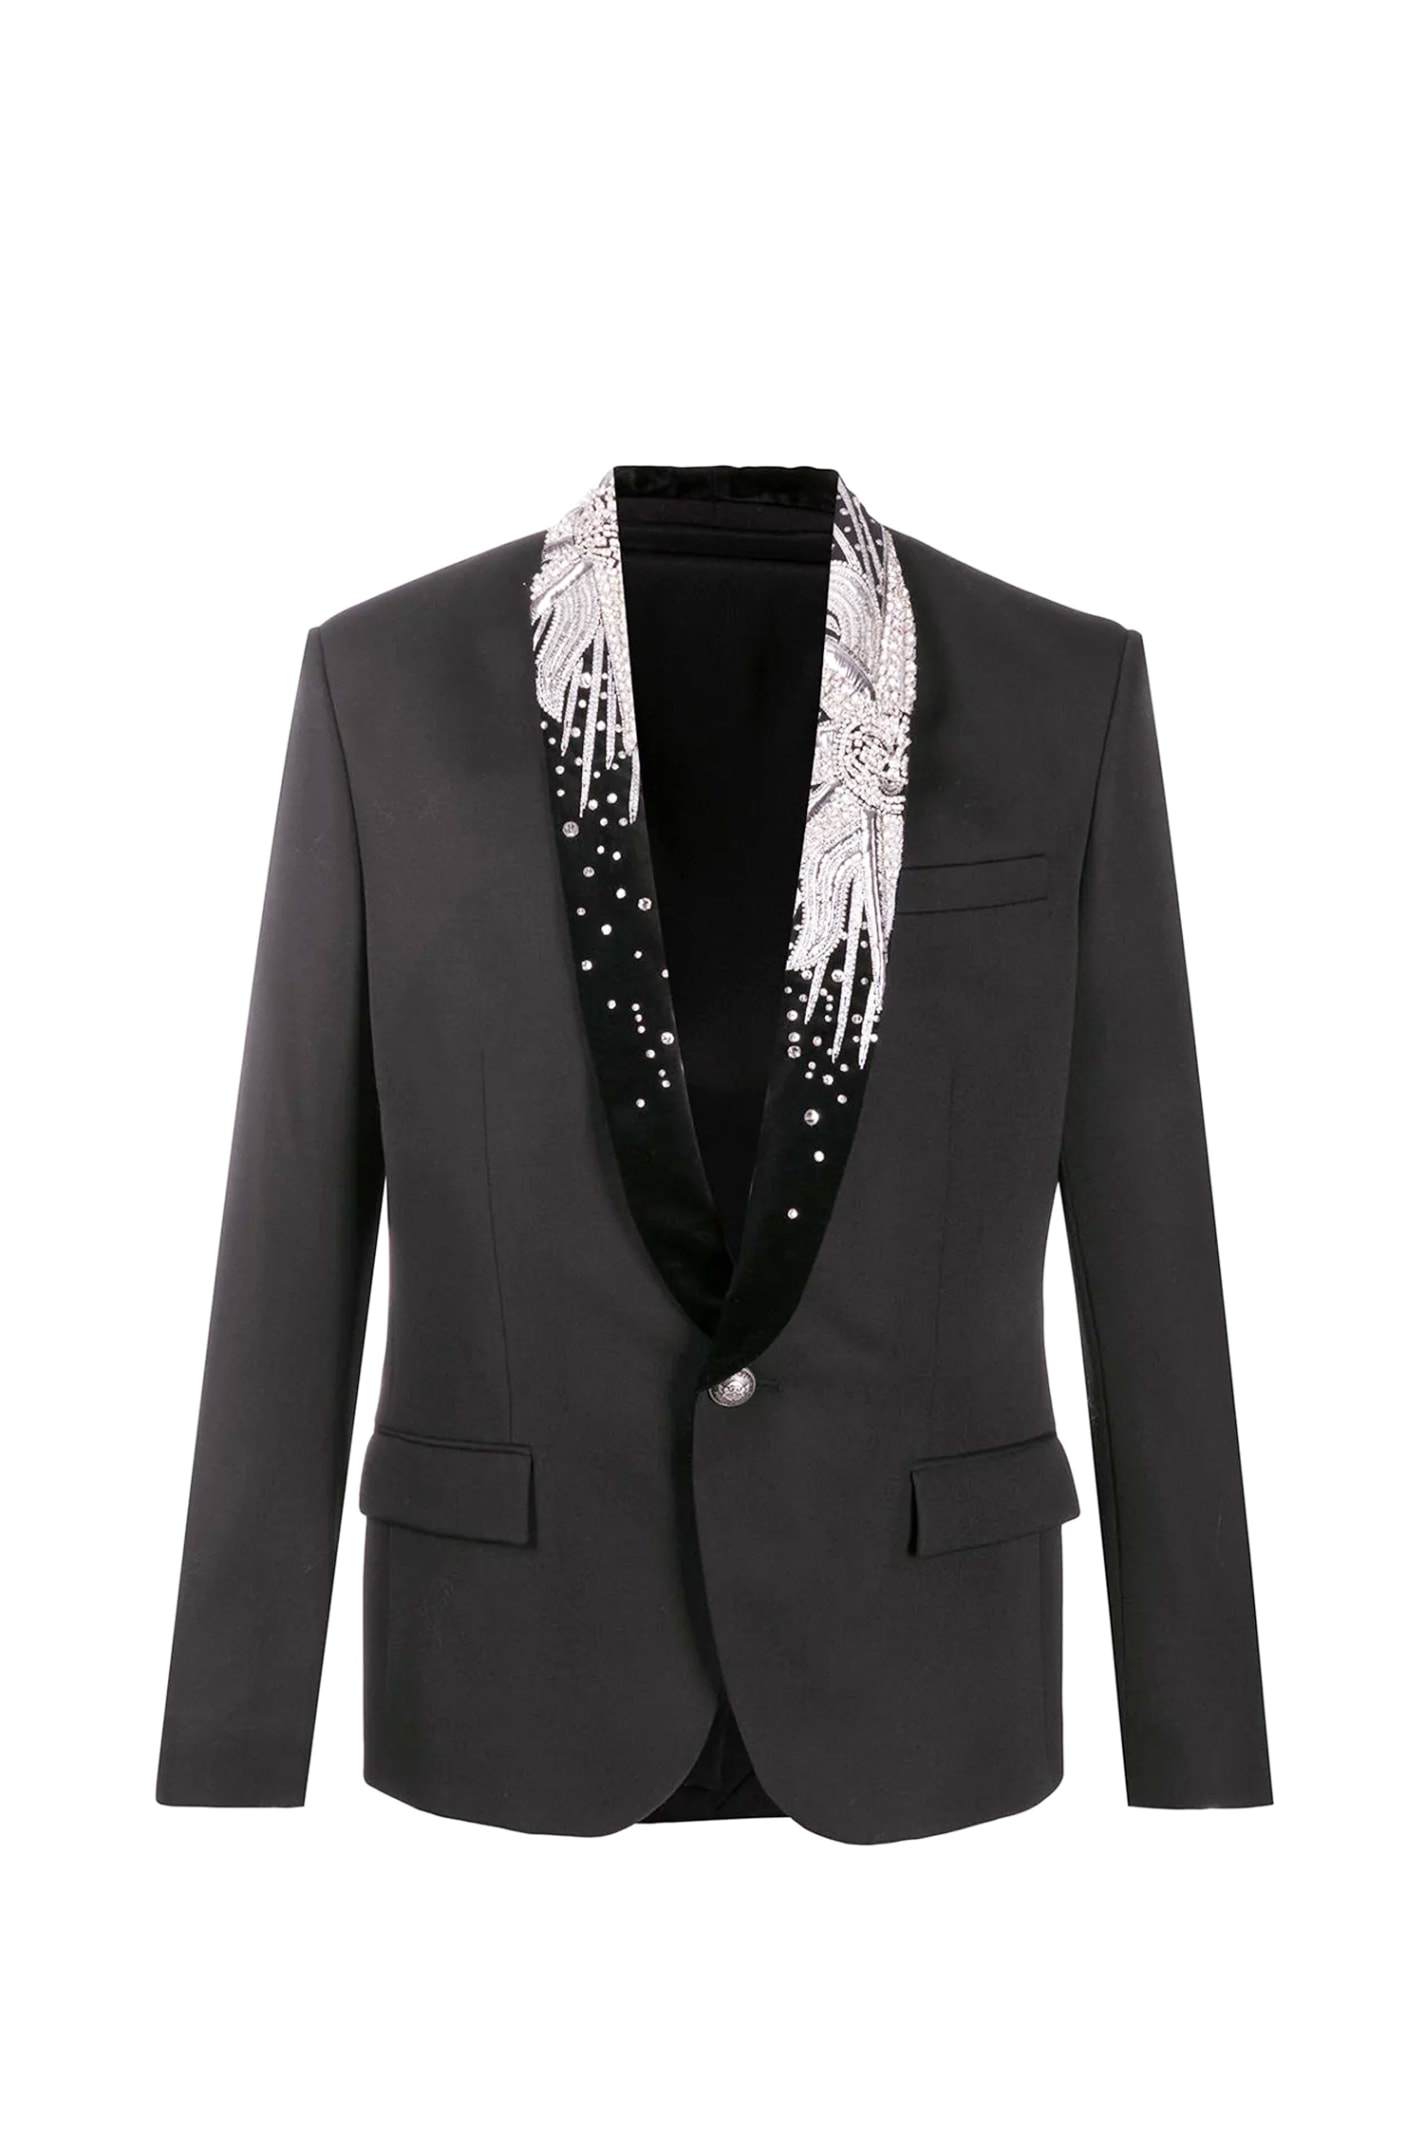 Balmain Black Wool Blazer With Embroidered Collar